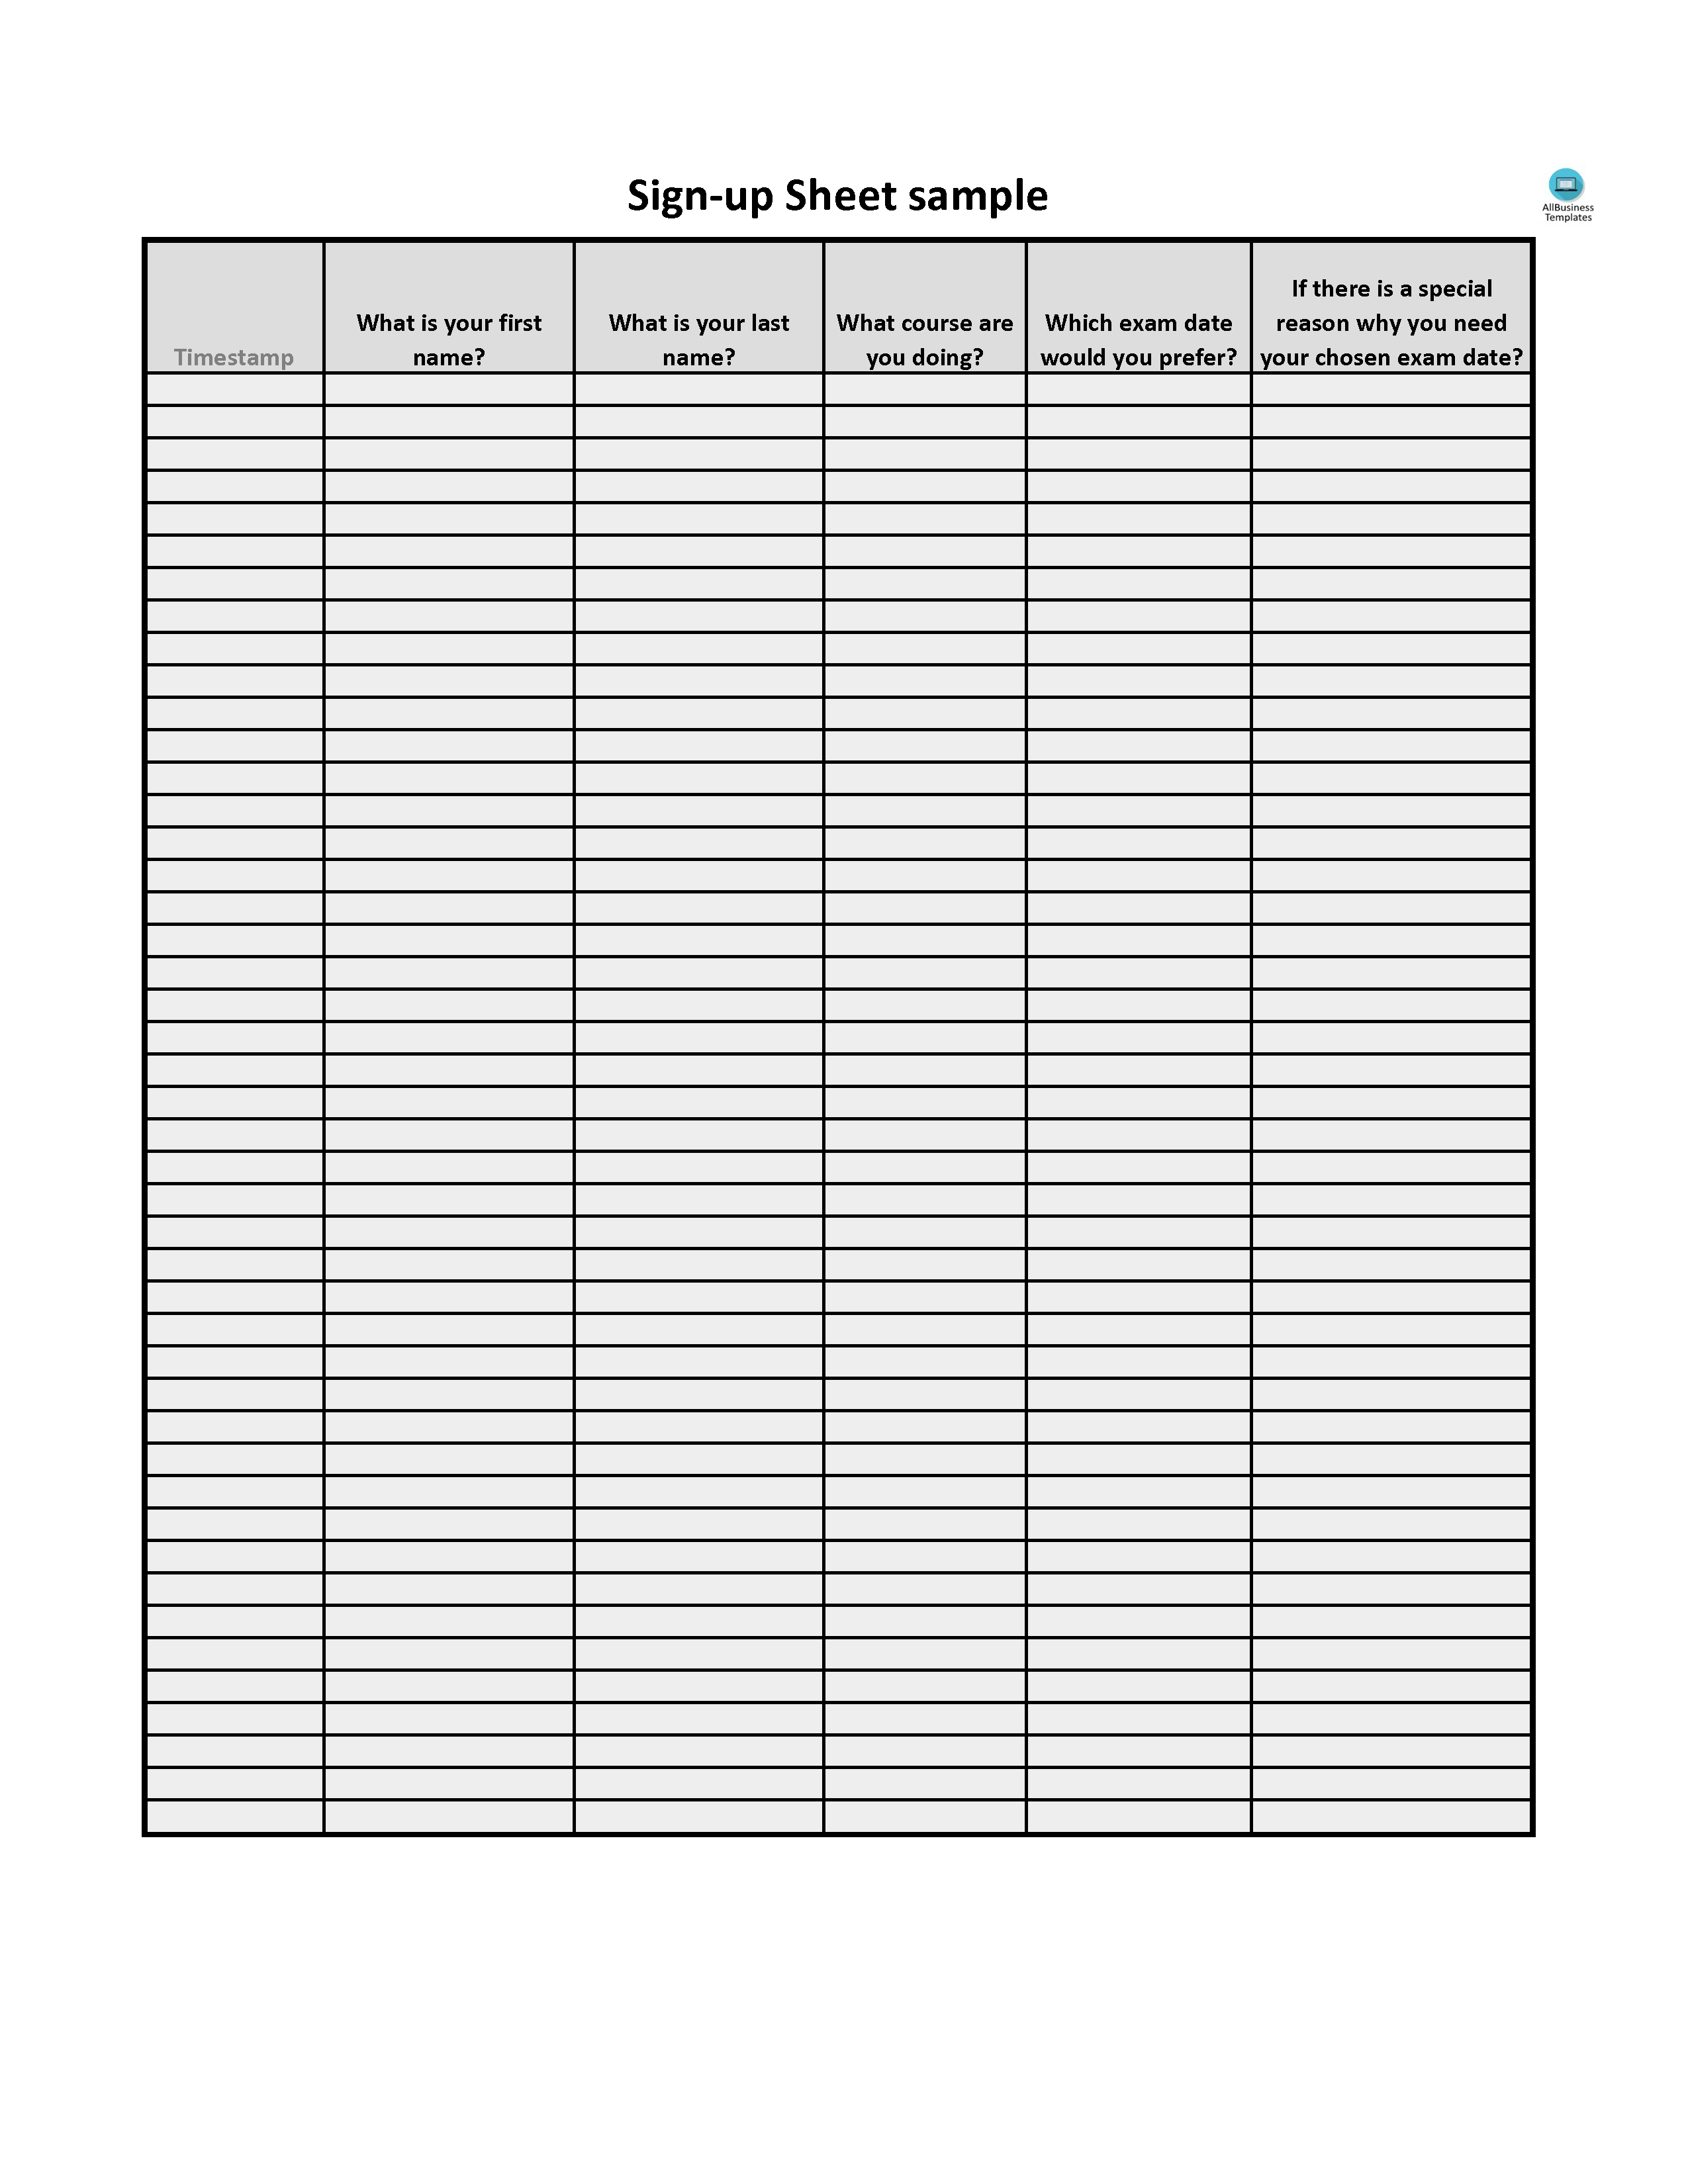 printable sign-up sheet sample template